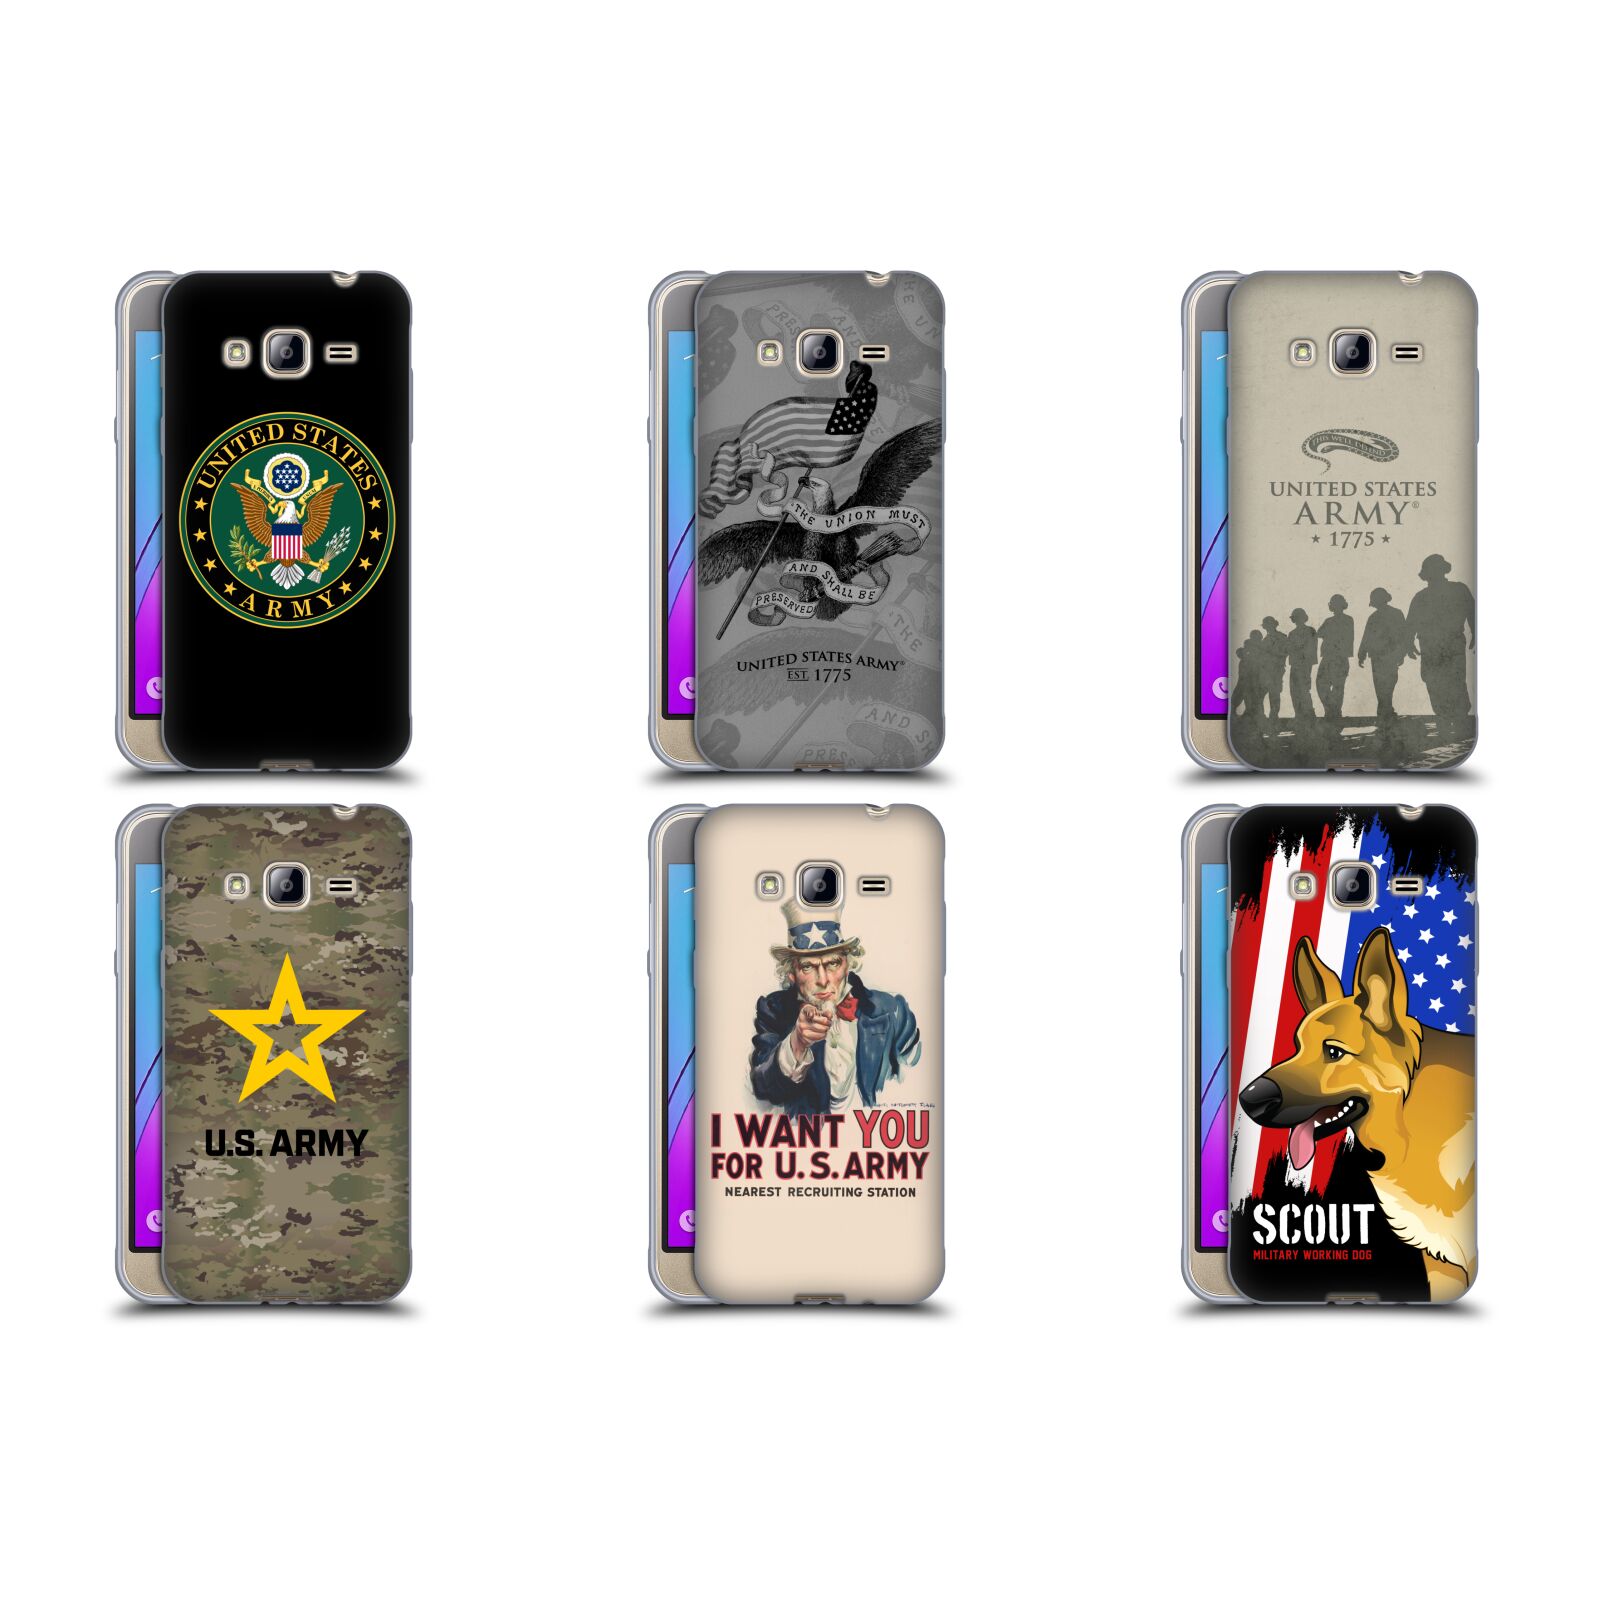 OFFICIAL U.S. ARMY KEY ART SOFT GEL CASE FOR SAMSUNG PHONES 3 | eBay